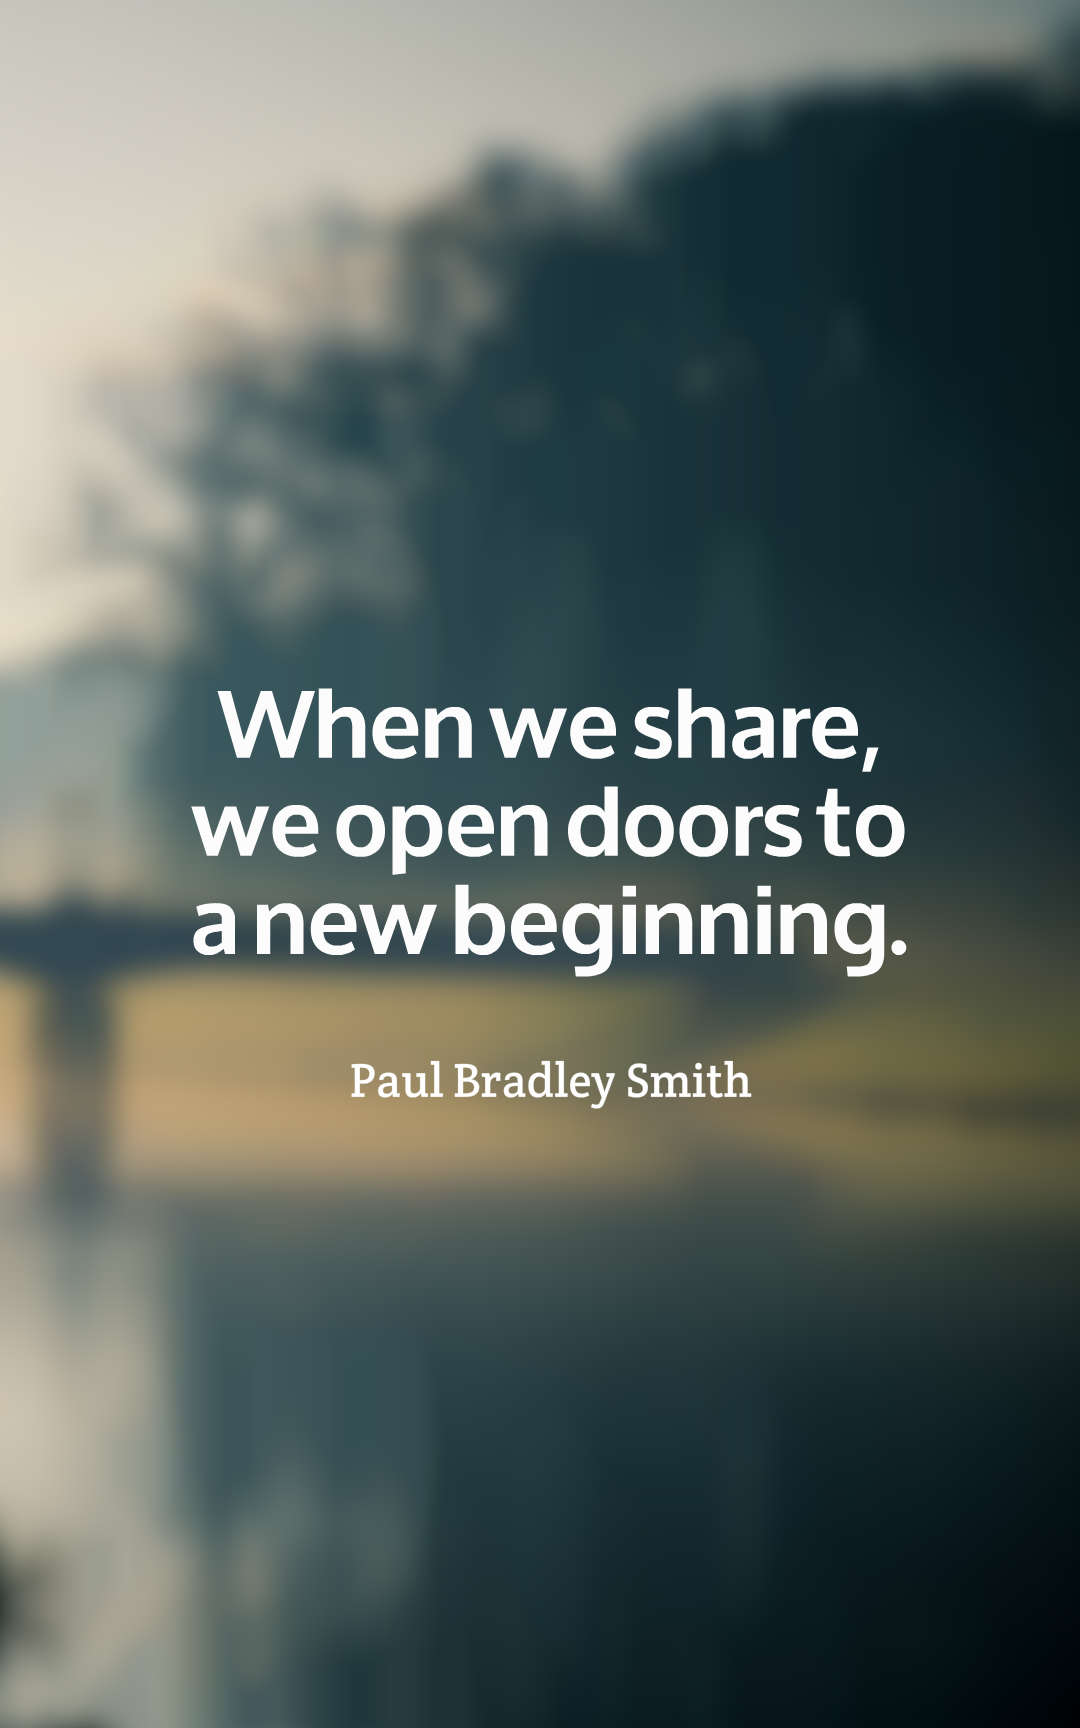 When we share, we open doors to a new beginning.